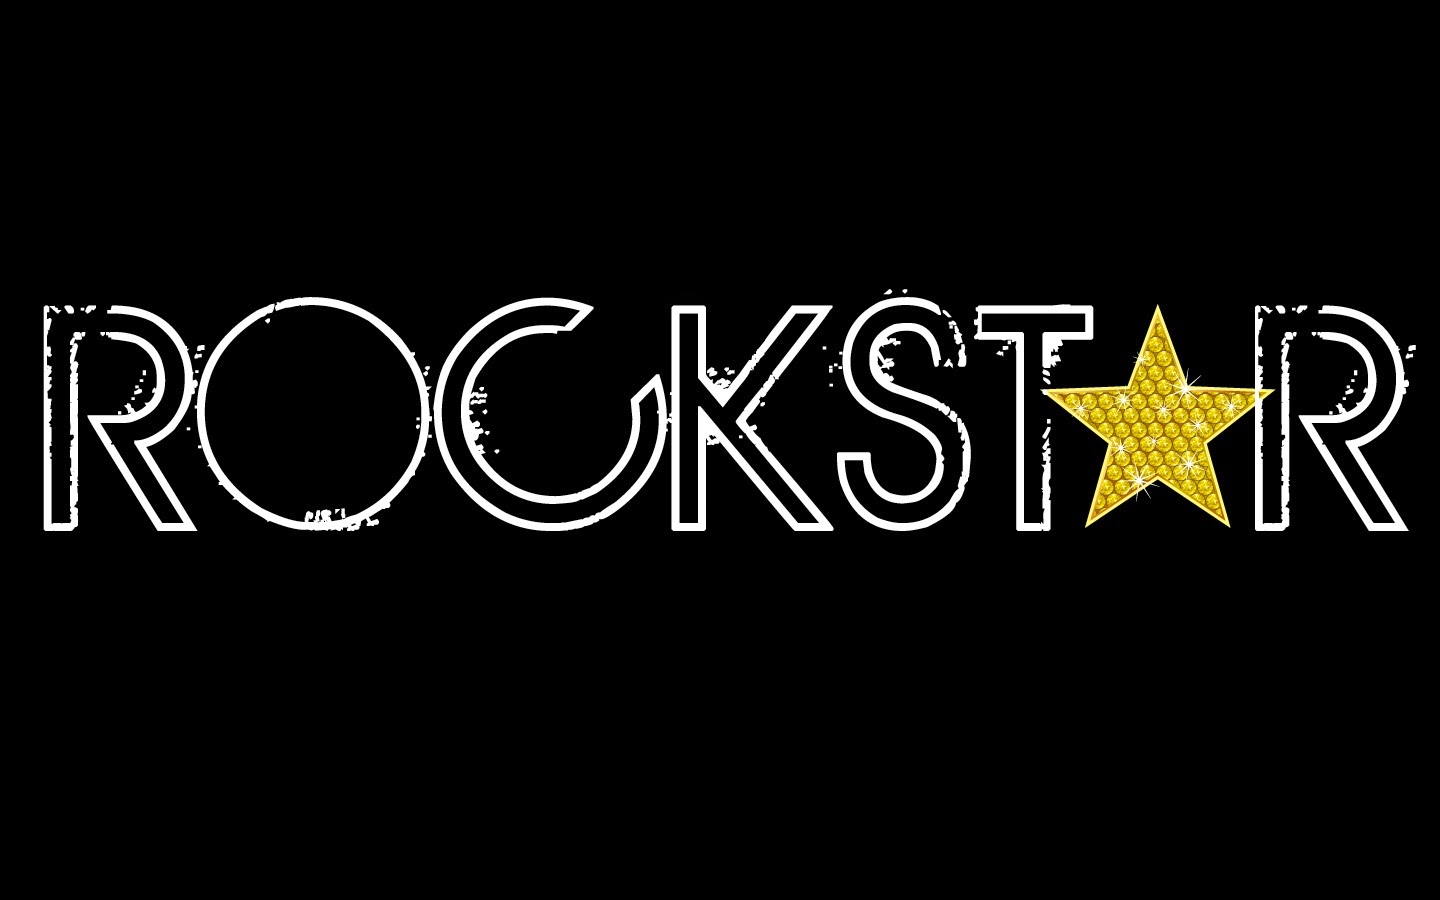 All About Logo: RockStar Logo